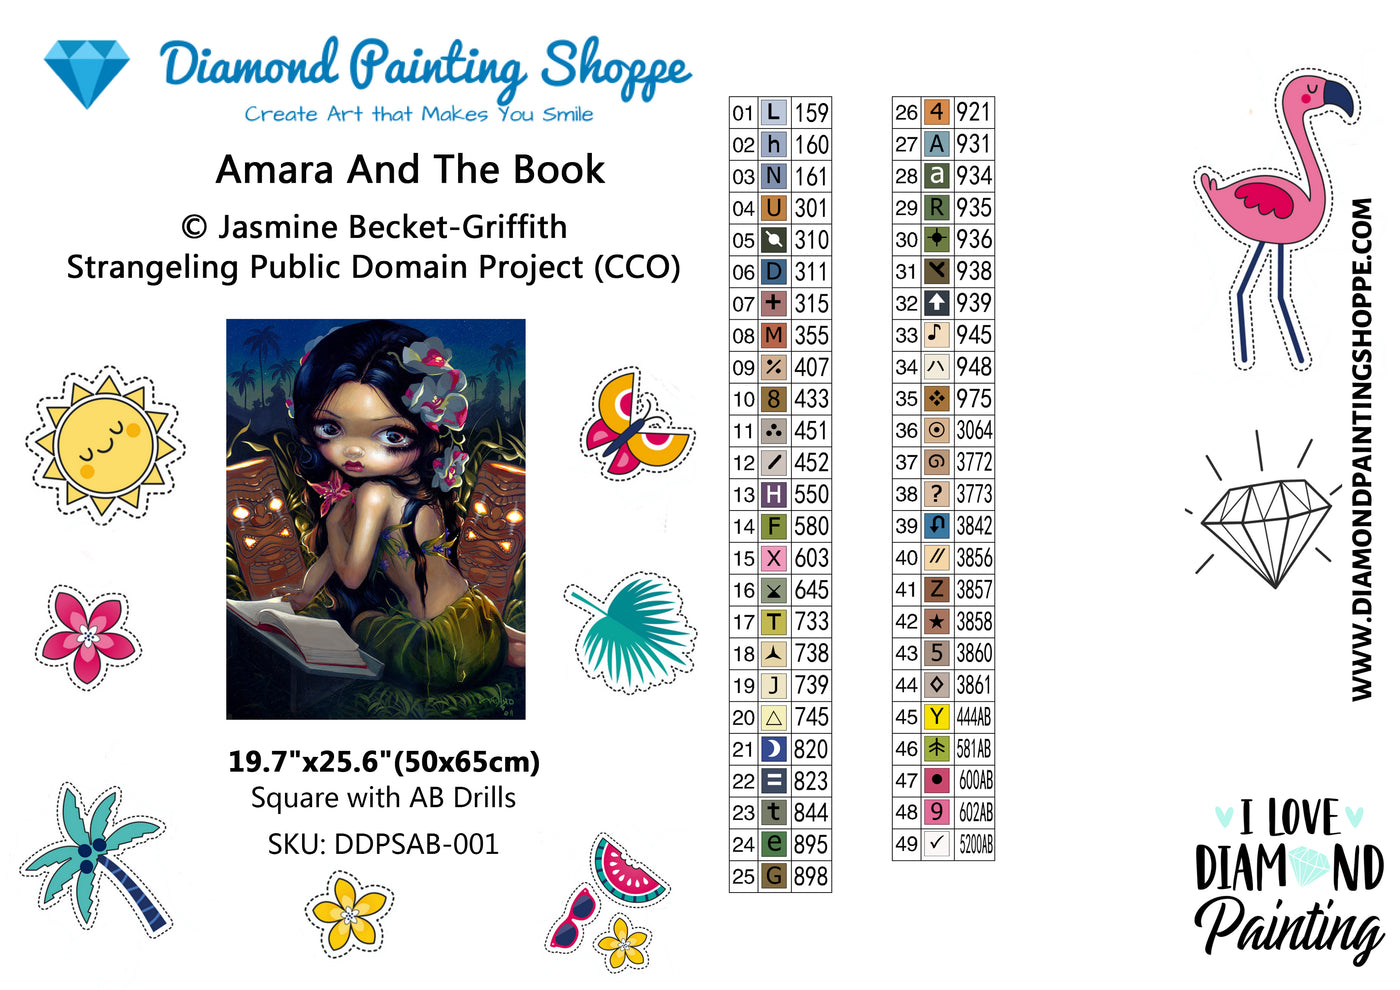 Amara And The Book